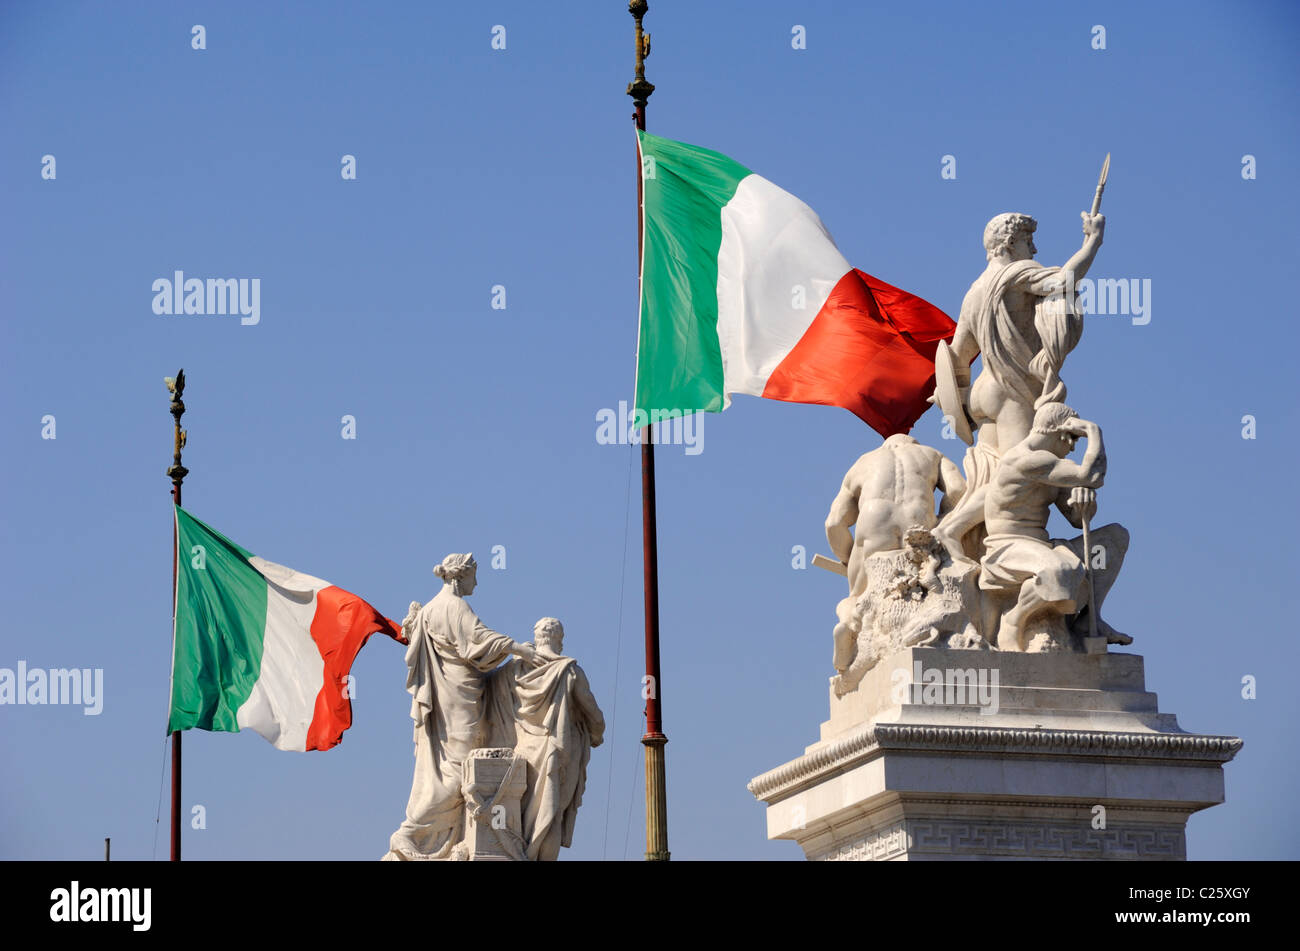 italy, rome, piazza venezia, vittoriano, statues and italian flags Stock Photo